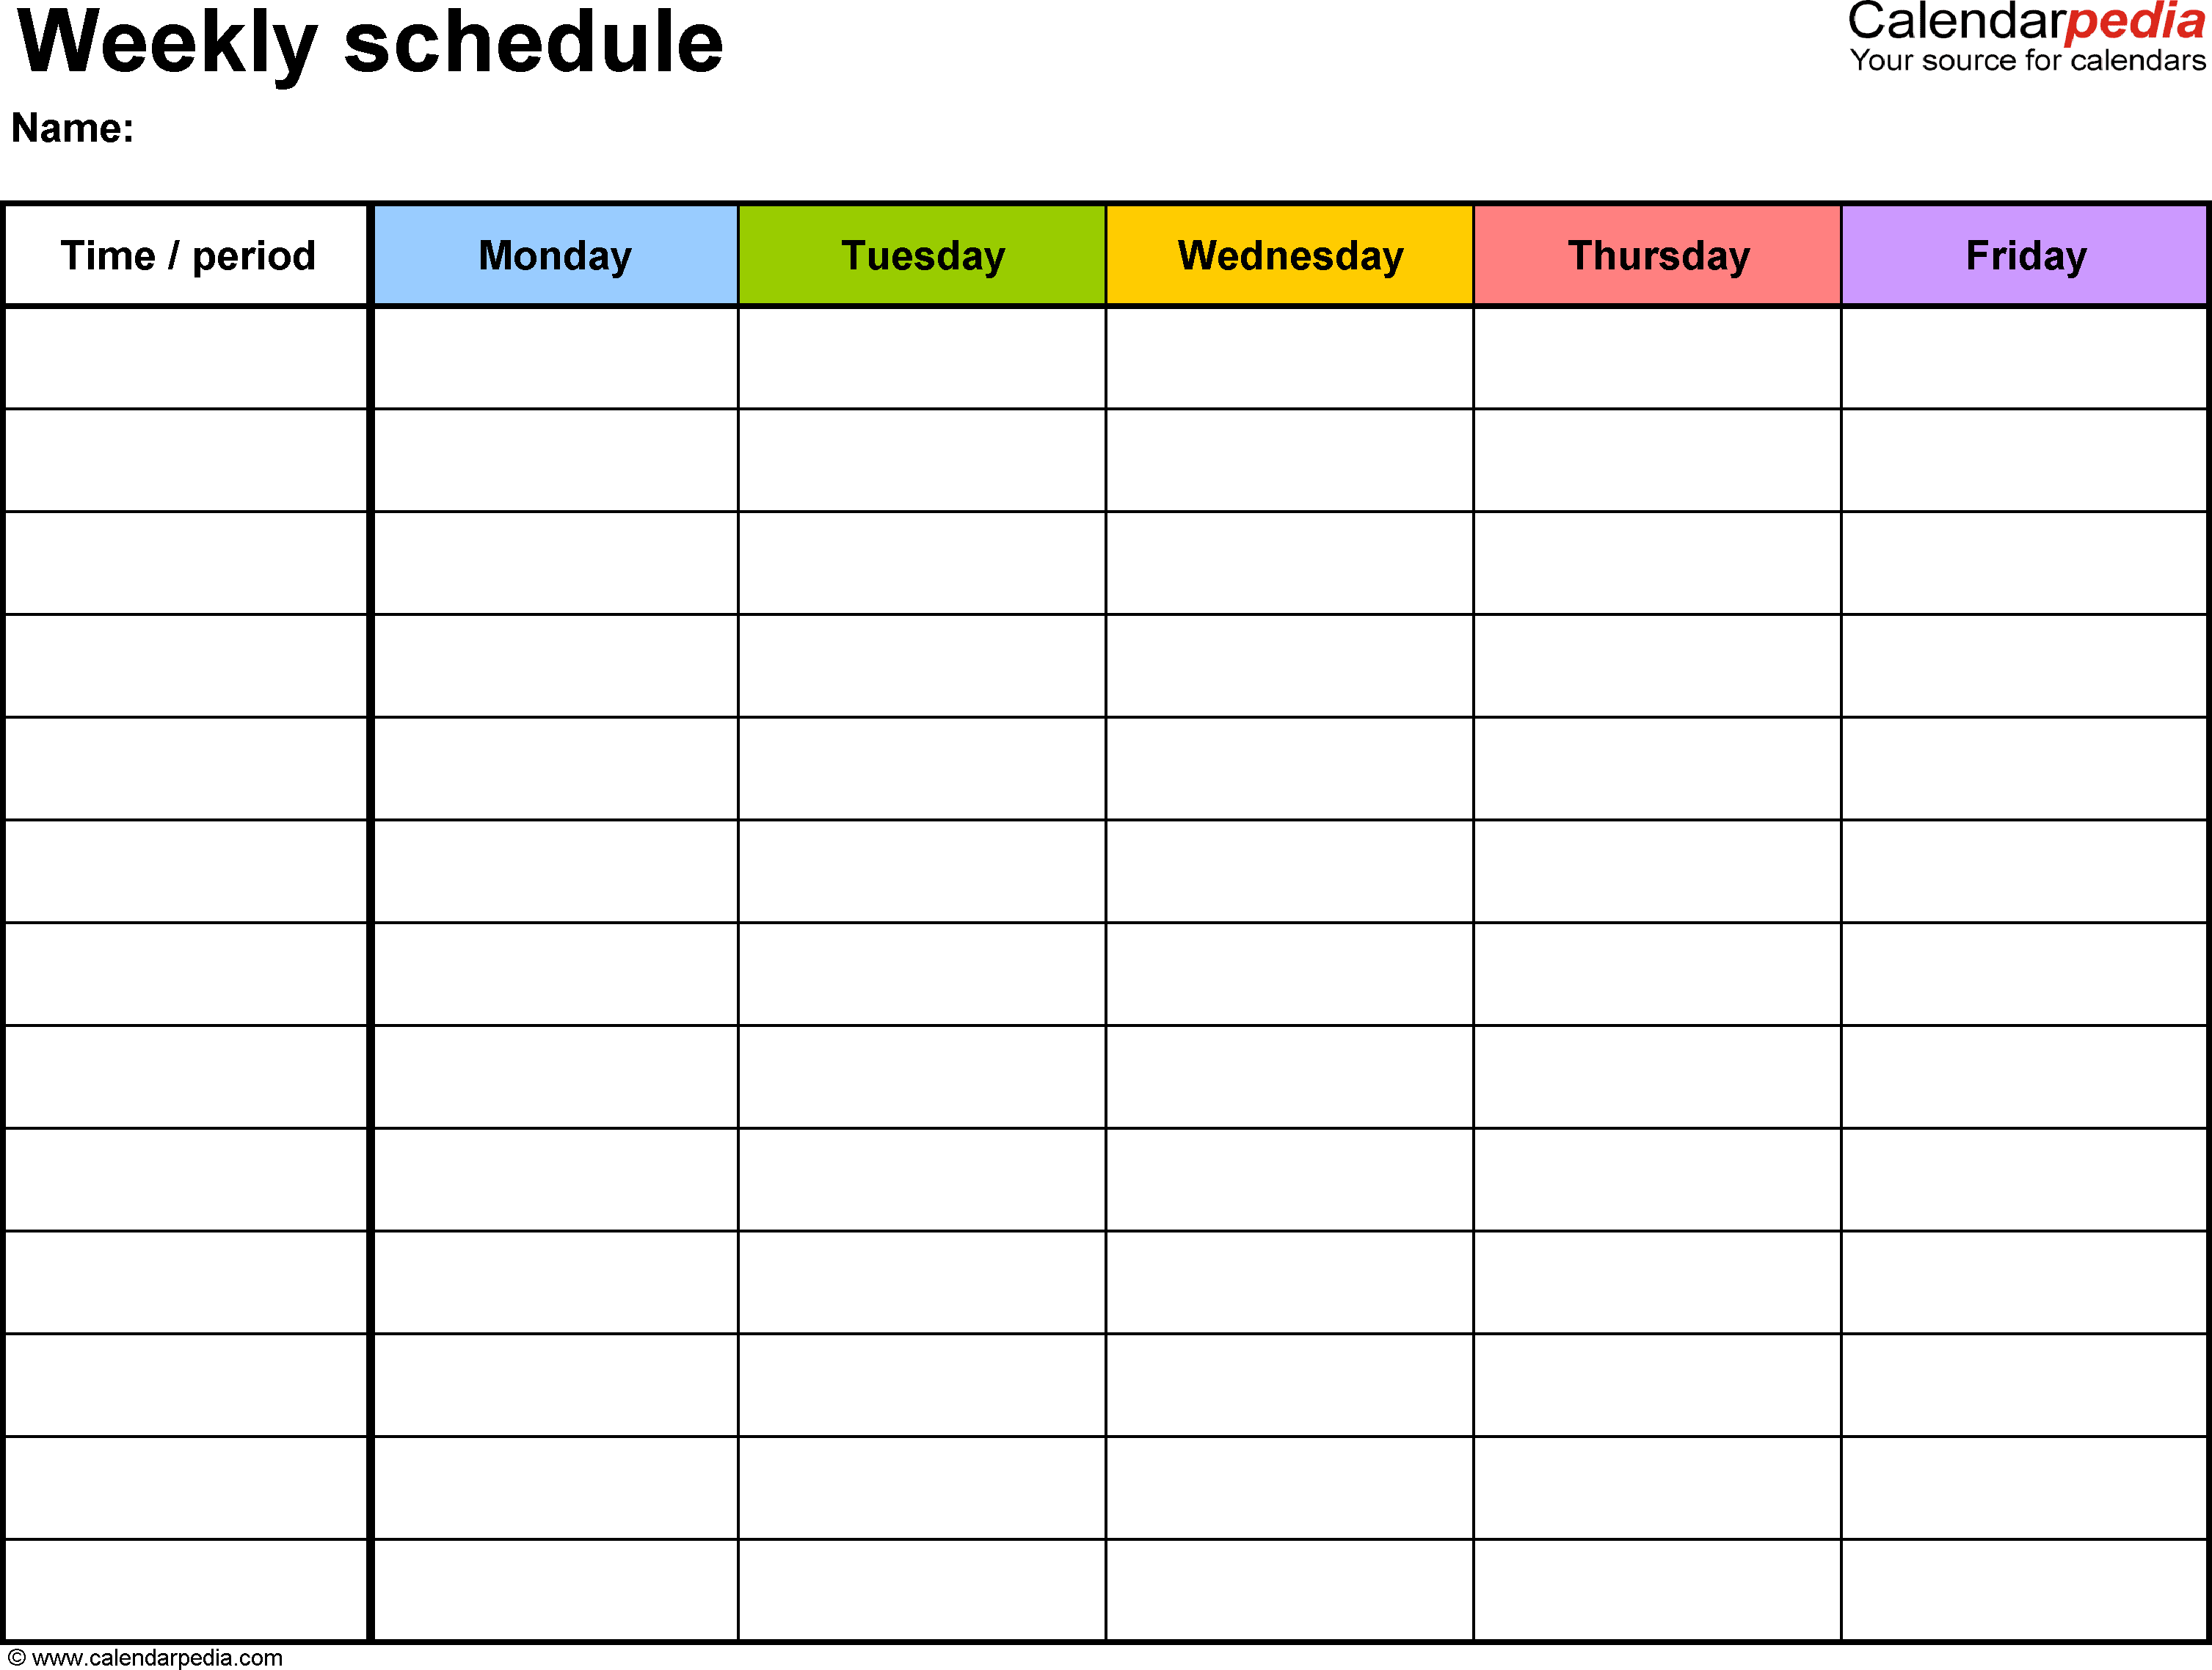 Blank Calendar Print Out Printable Calendar Template Weekly Calendar Template Daily Calendar Template Free Weekly Calendar